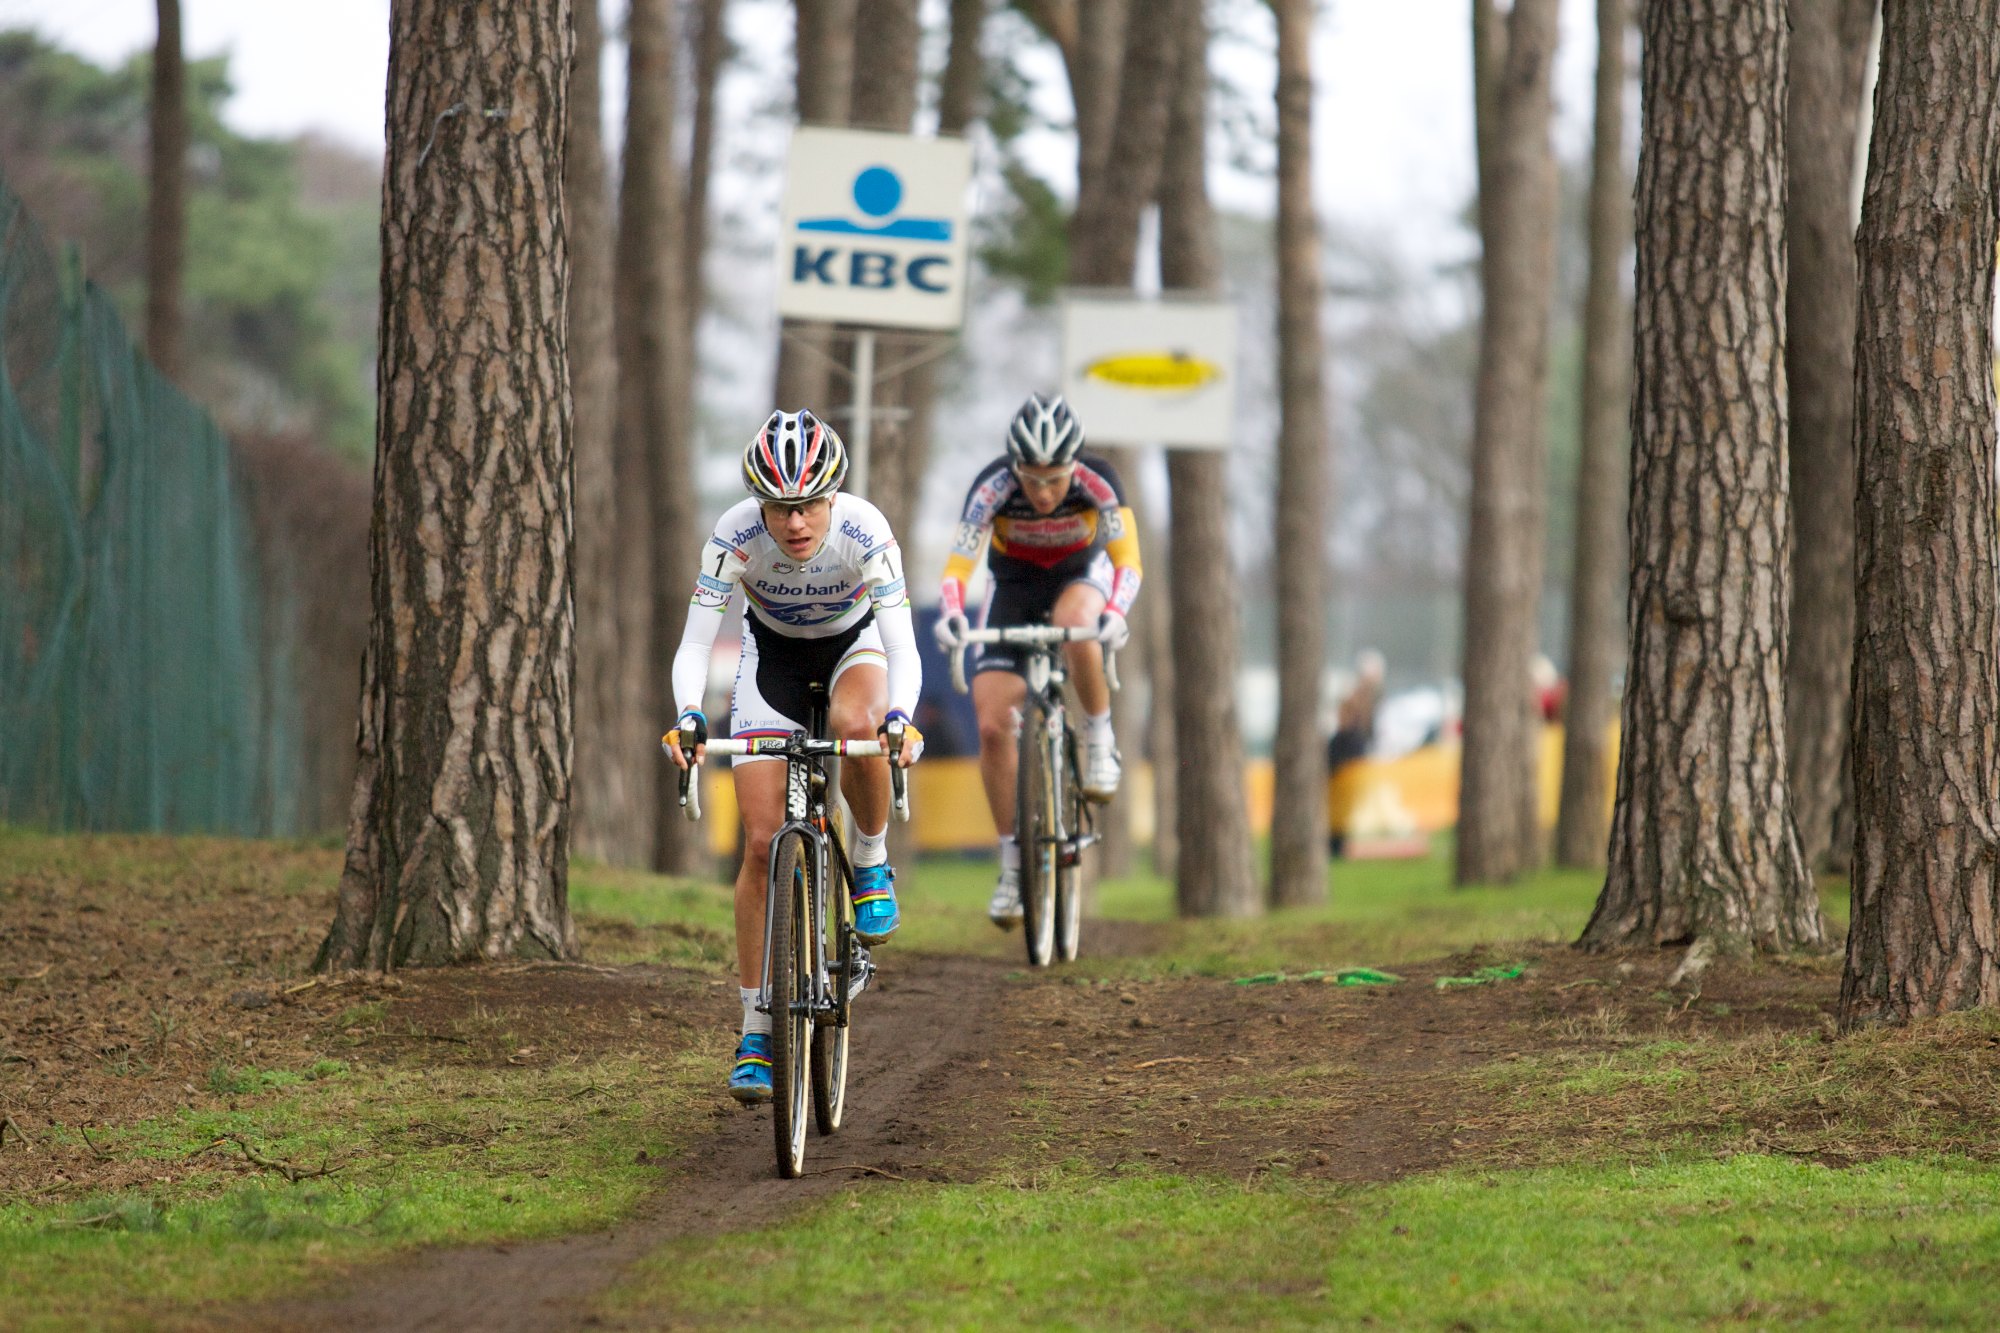 Marianne Vos, Netherlands, Rabobank, cyclo-cross, World Cup, 2013/14, Zolder, pic: Balint Hamvas